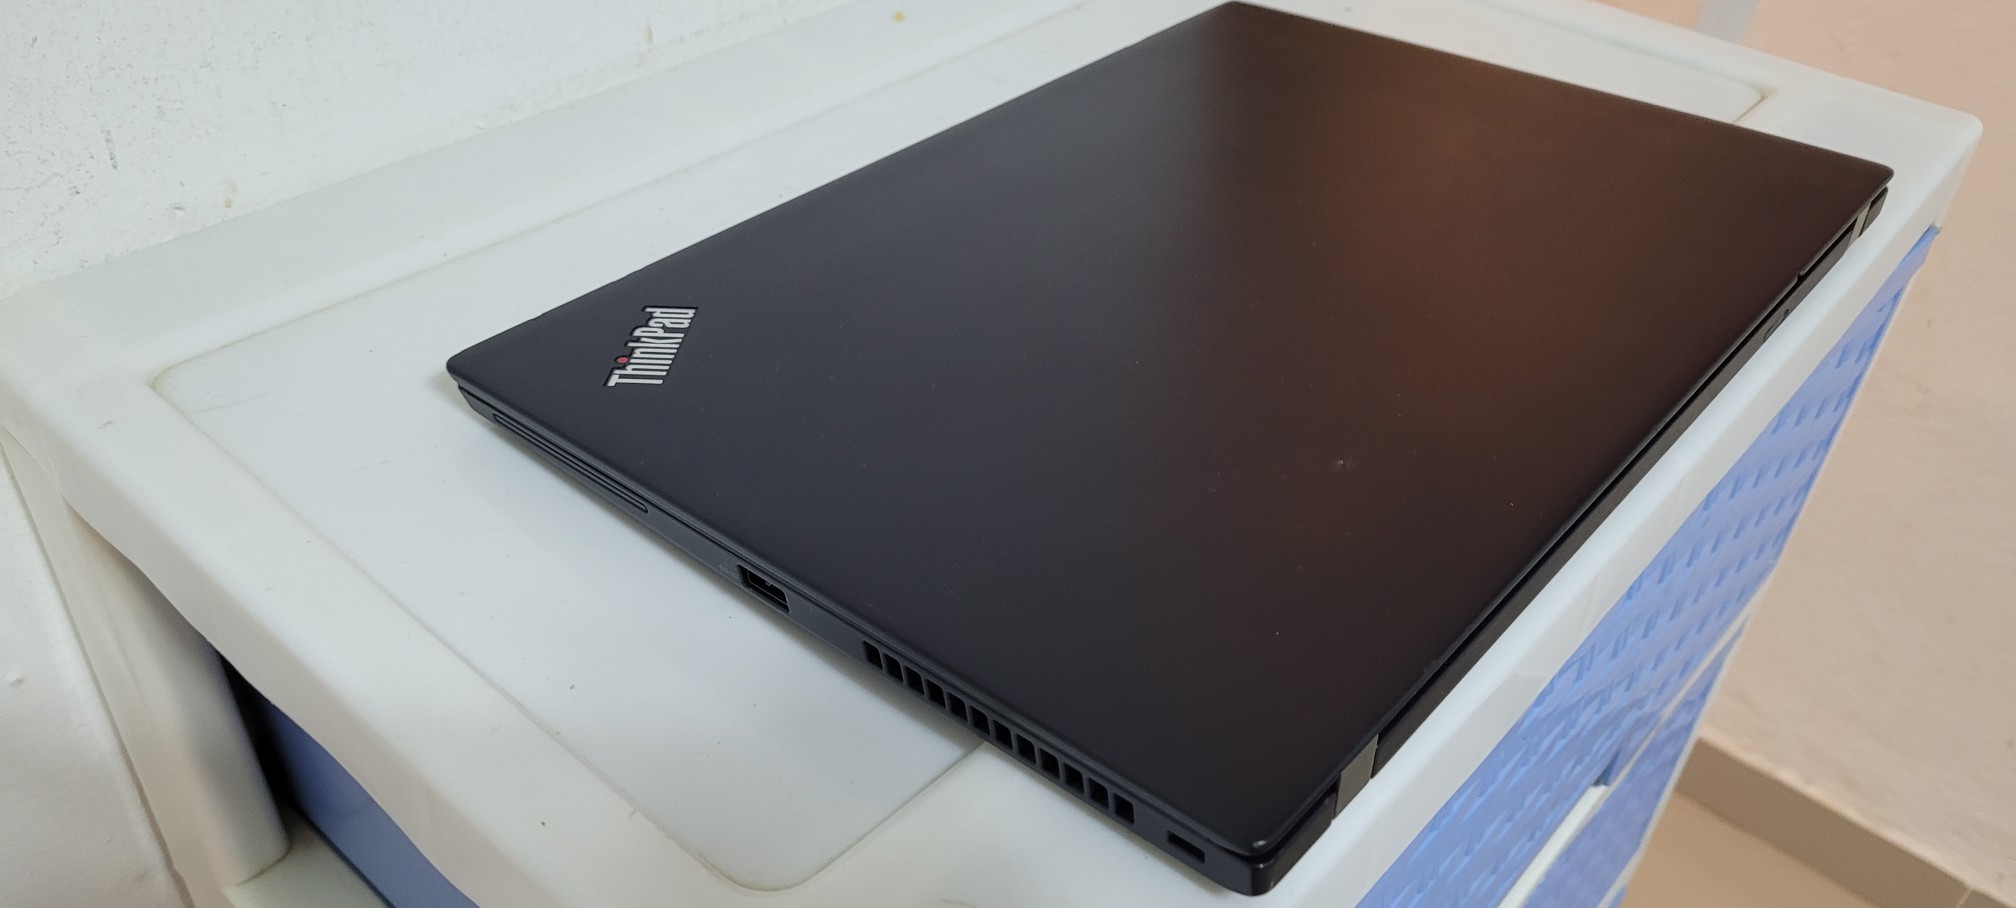 computadoras y laptops - Lenovo Slim t460 14 Pulg Core i5 Ram 8gb Disco 256gb SSD New 2